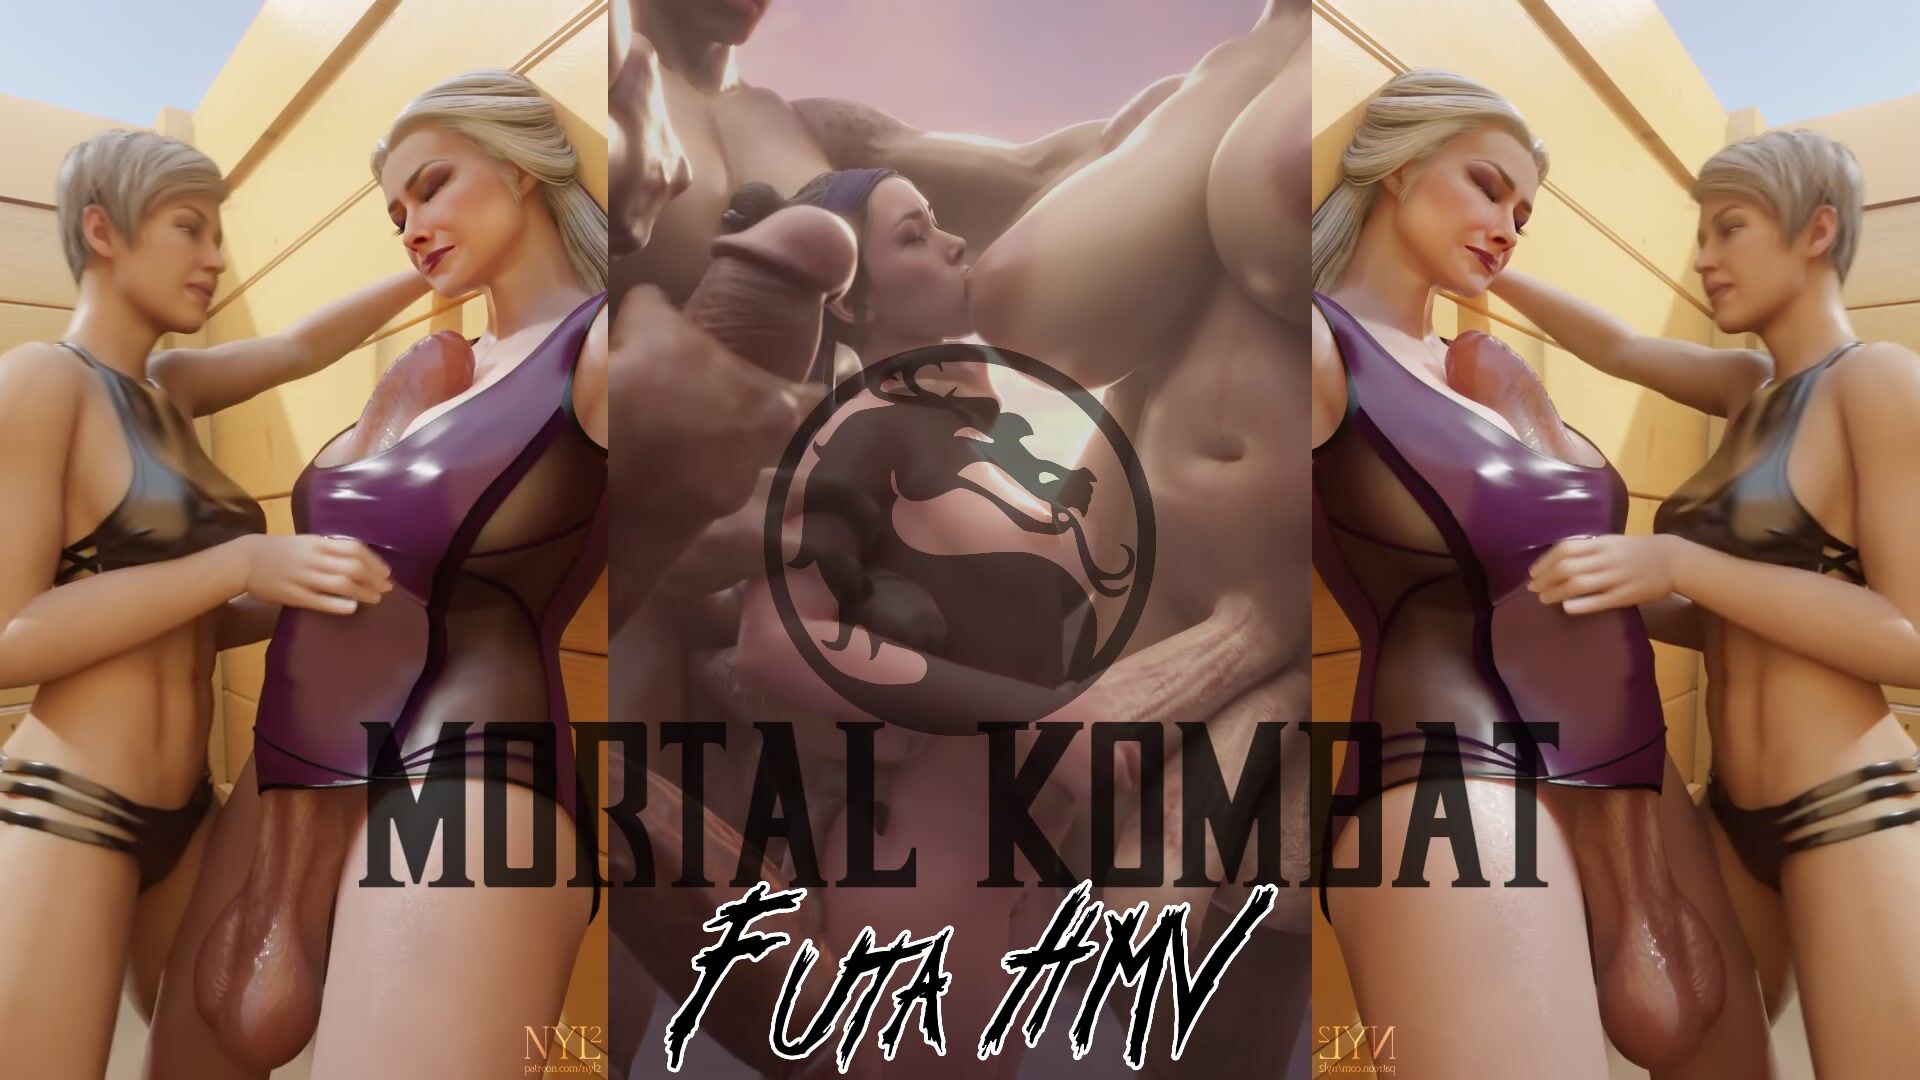 Mortal Kombat Futa HMV